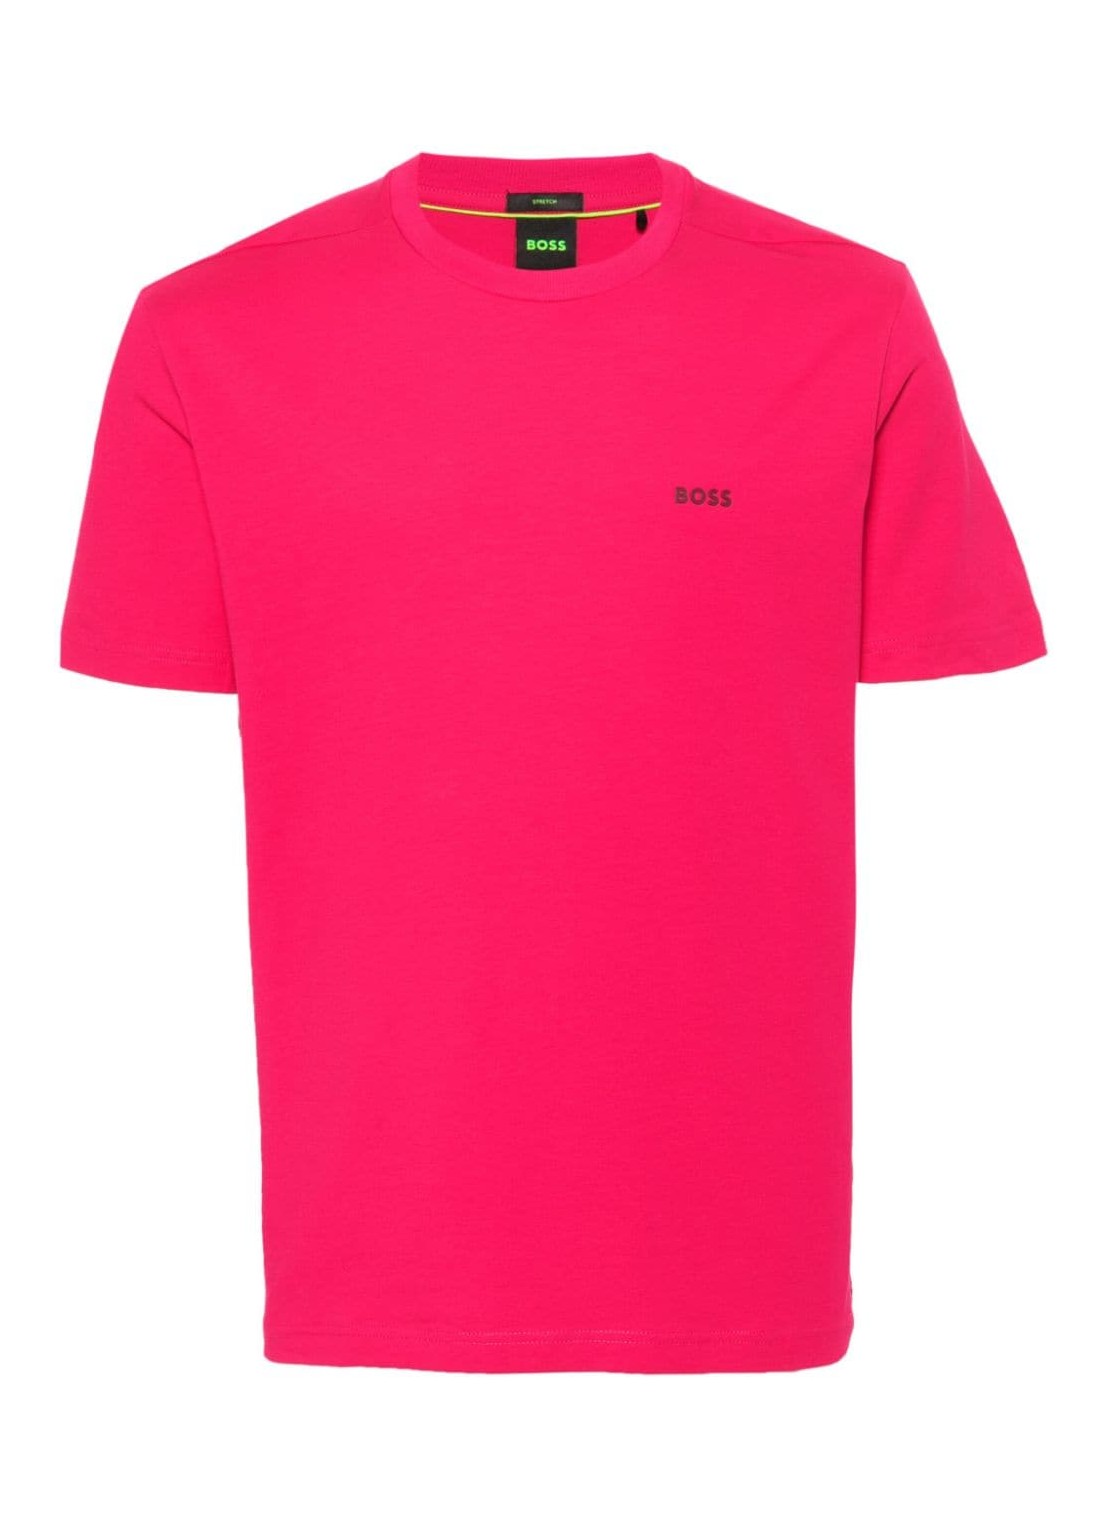 Camiseta boss t-shirt man tee 50506373 698 talla rosa
 